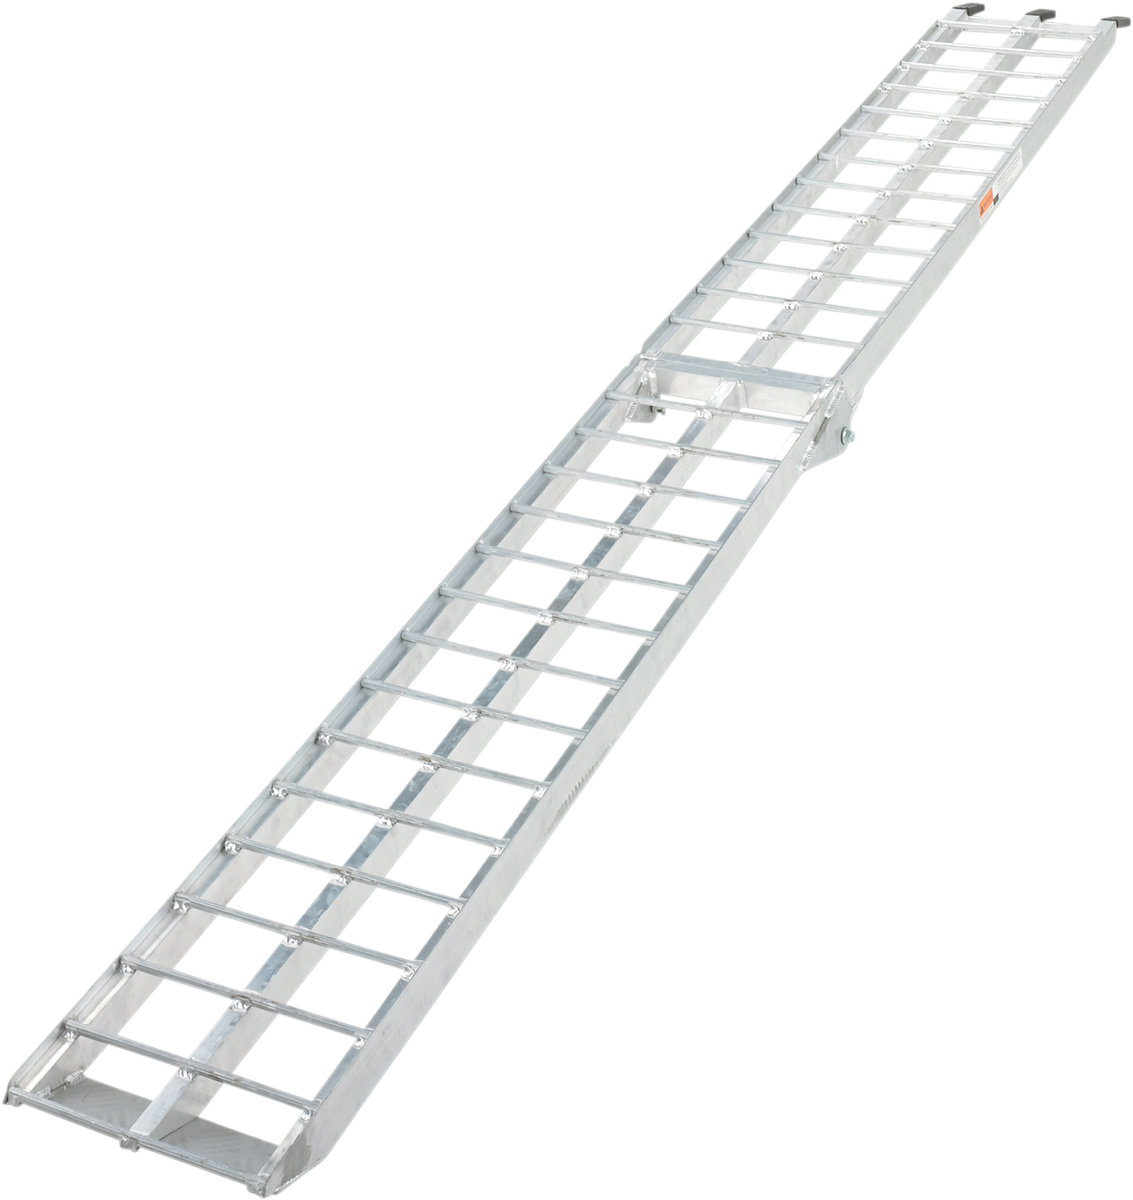 MOOSE RACING Folding Ramp - Aluminum - 12 x 108 3910-0034